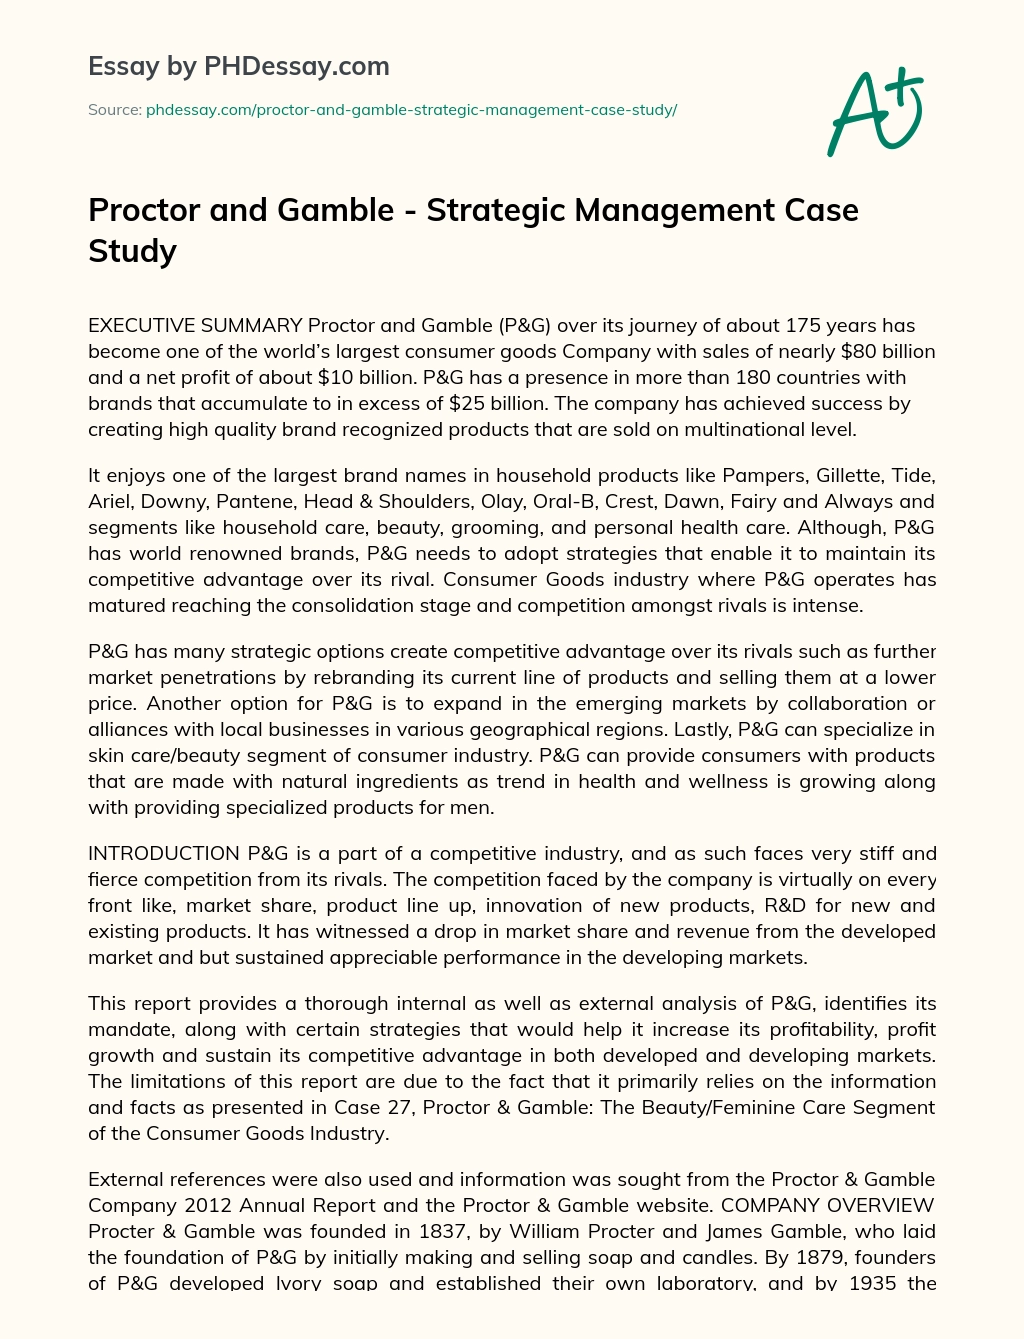 Proctor and Gamble – Strategic Management Case Study essay